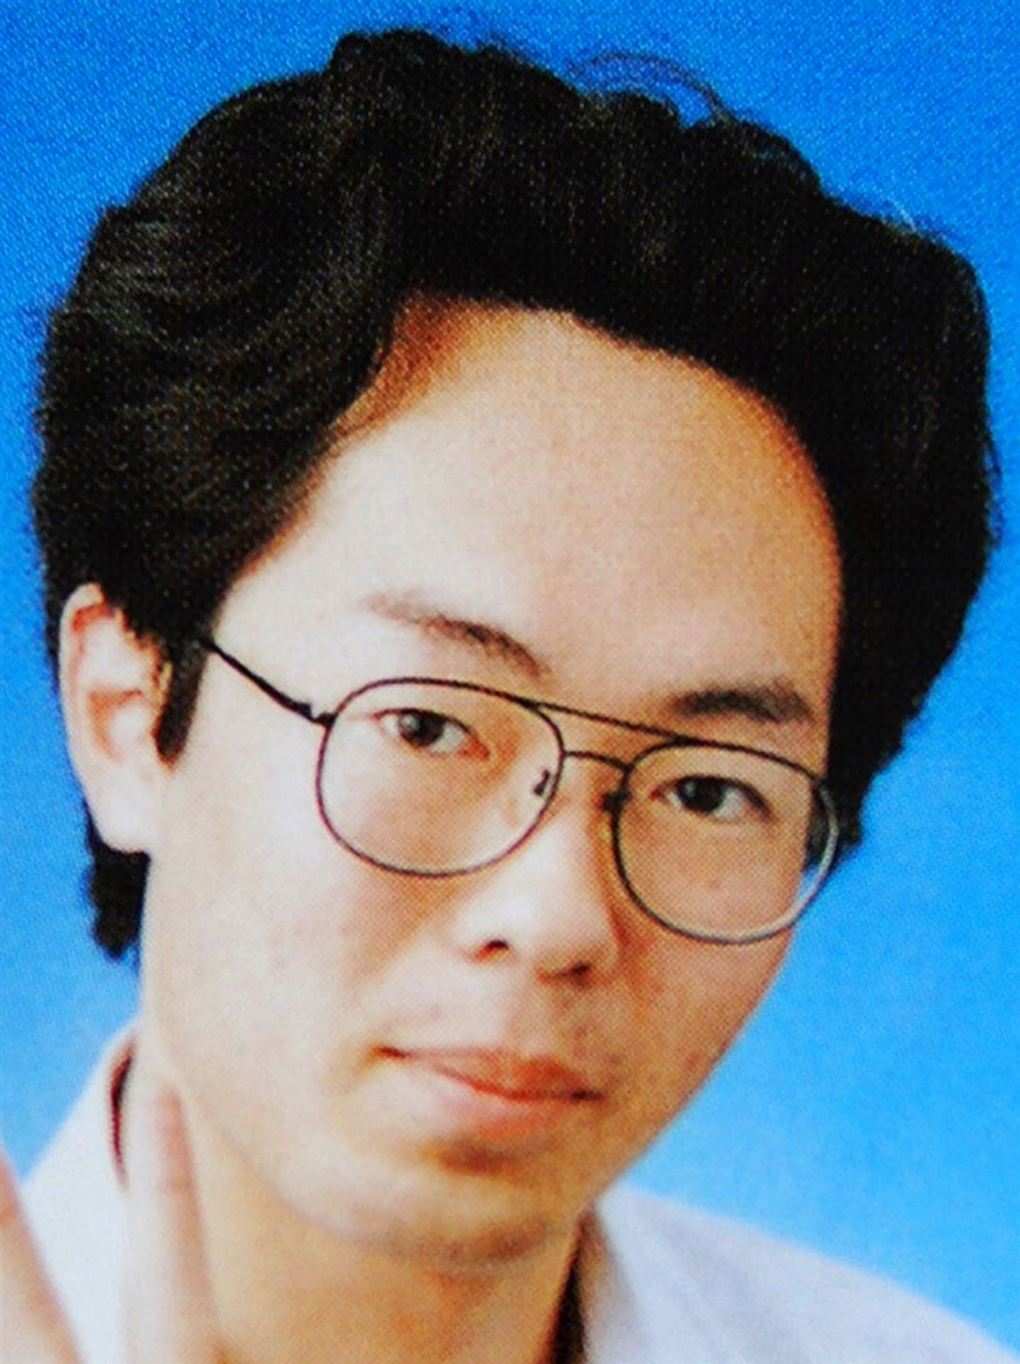 Tomohiro Kato